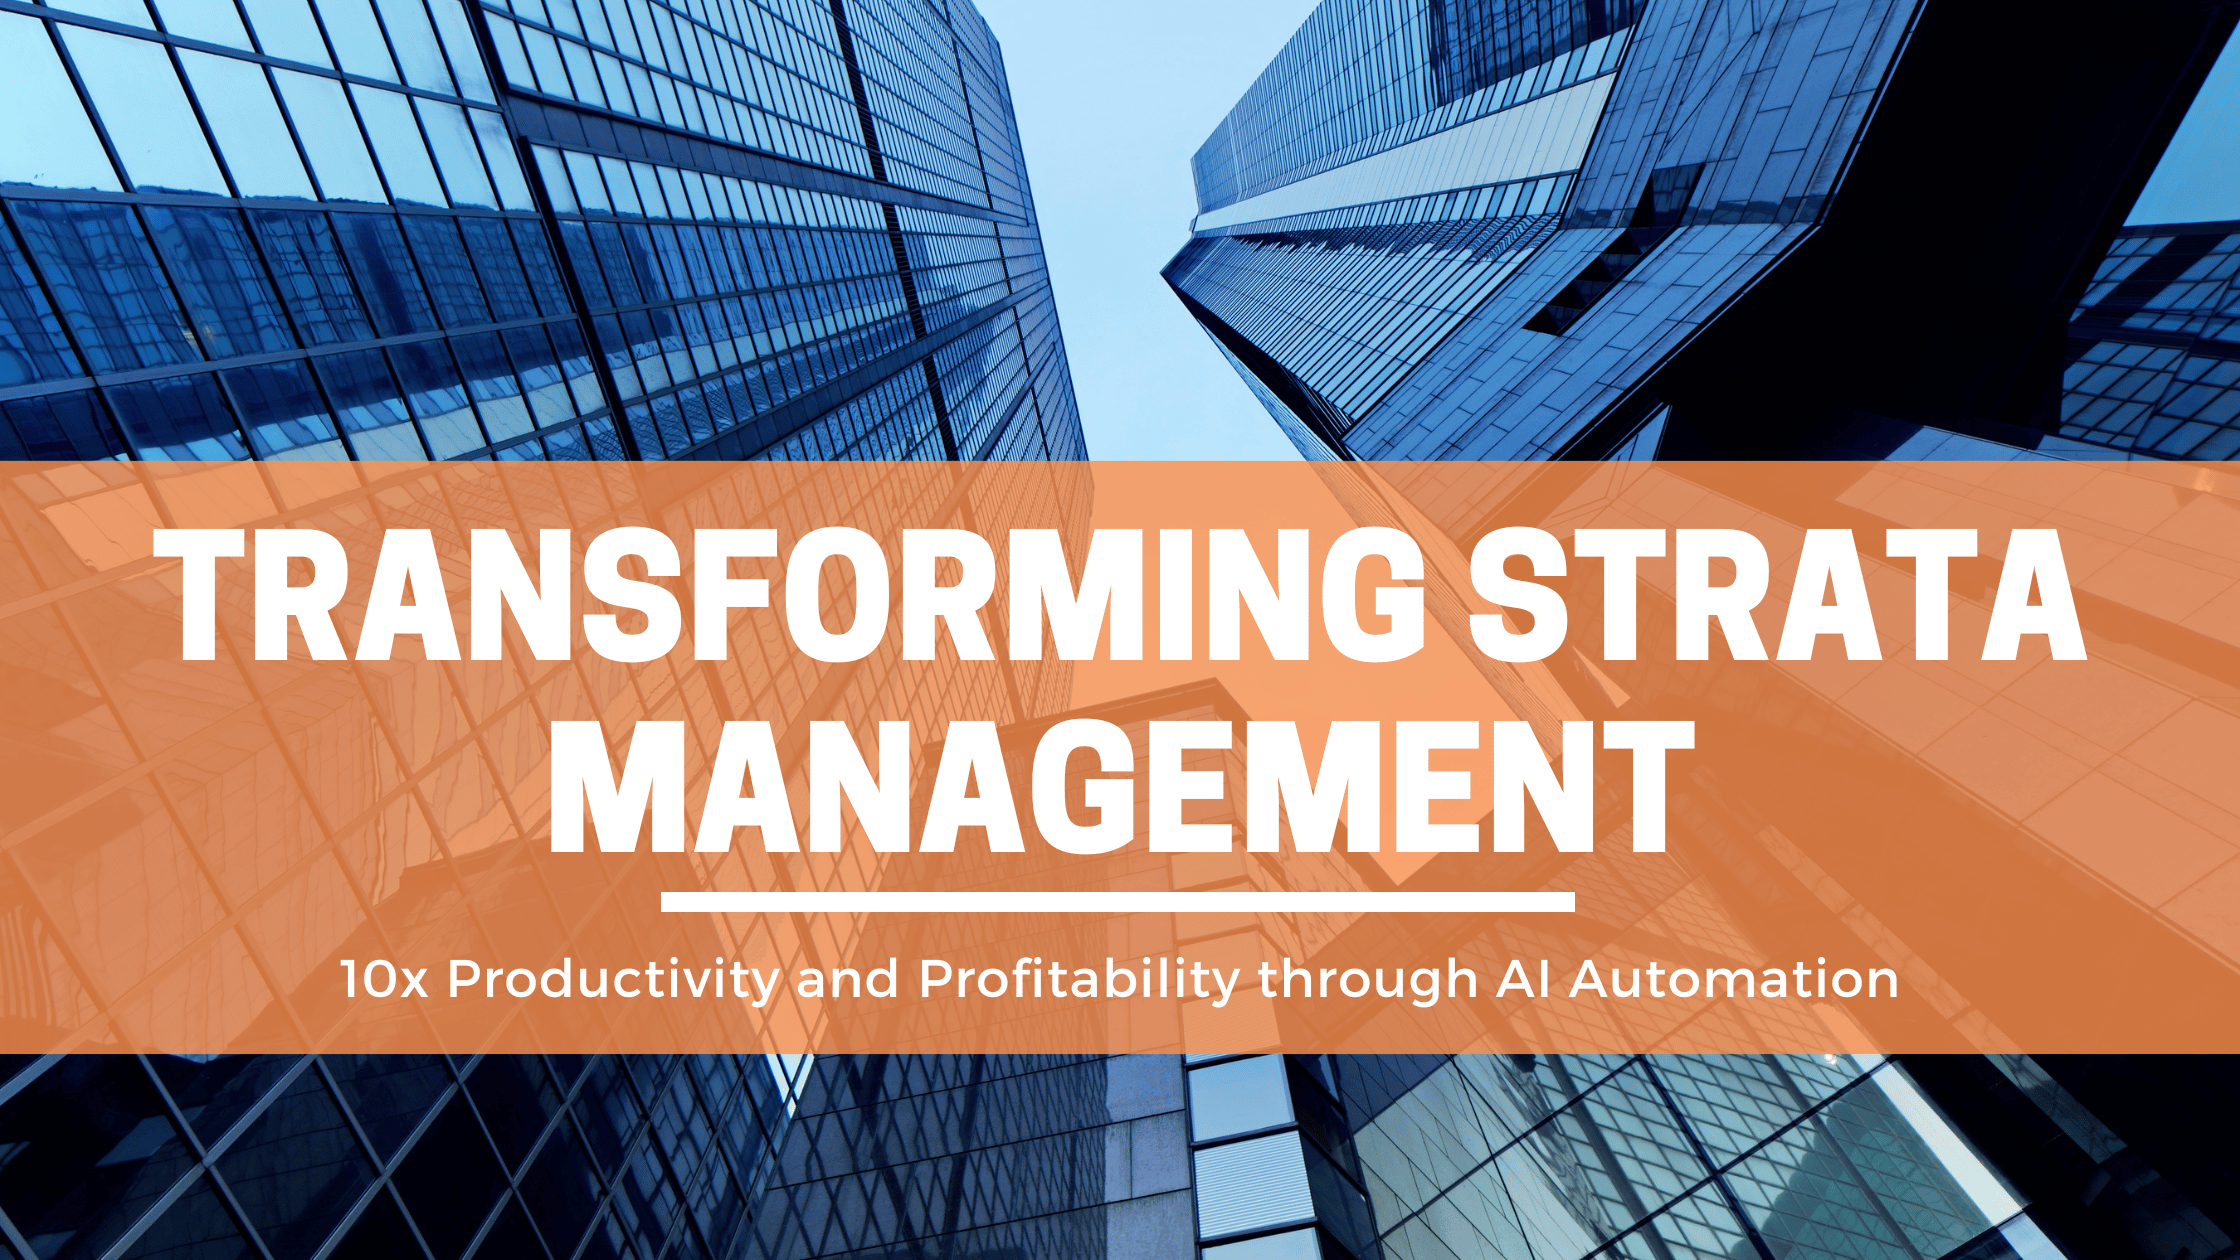 Transforming Strata Management